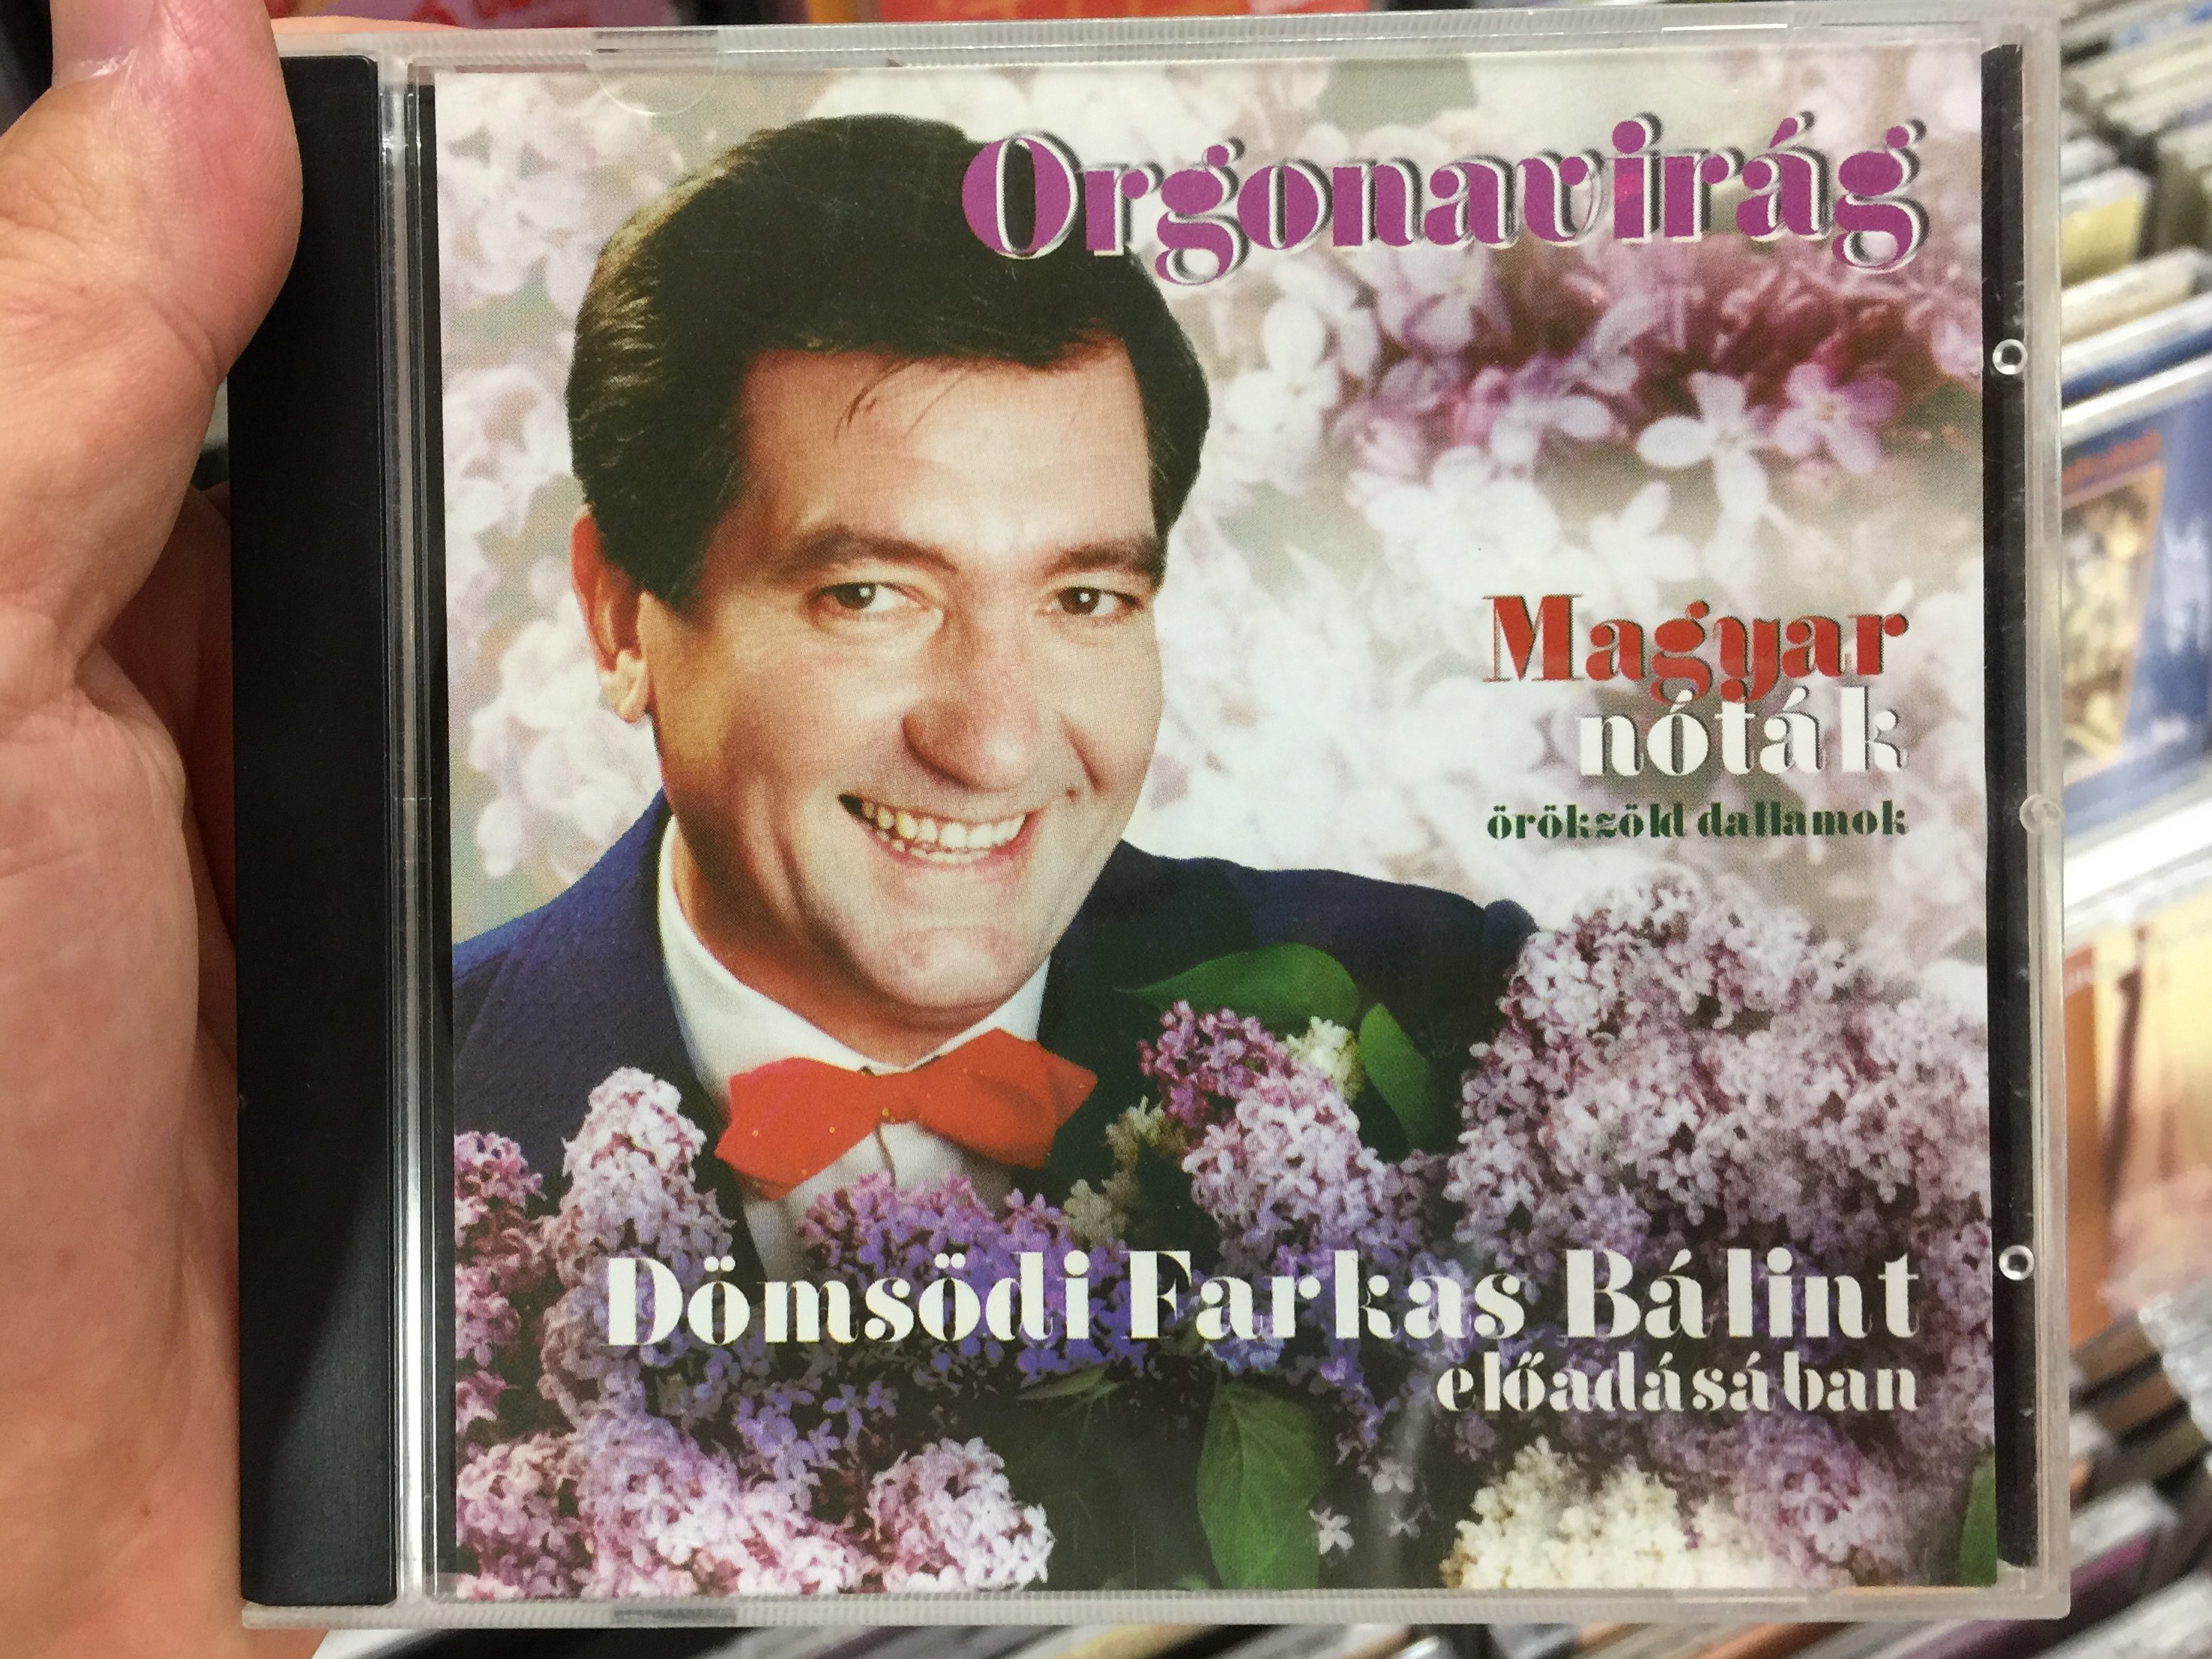 orgonavirag-magyar-notak-orokzokl-dallamok-domsodi-farkas-balint-eloadasaban-audio-cd-1999-5999541750121-1-.jpg